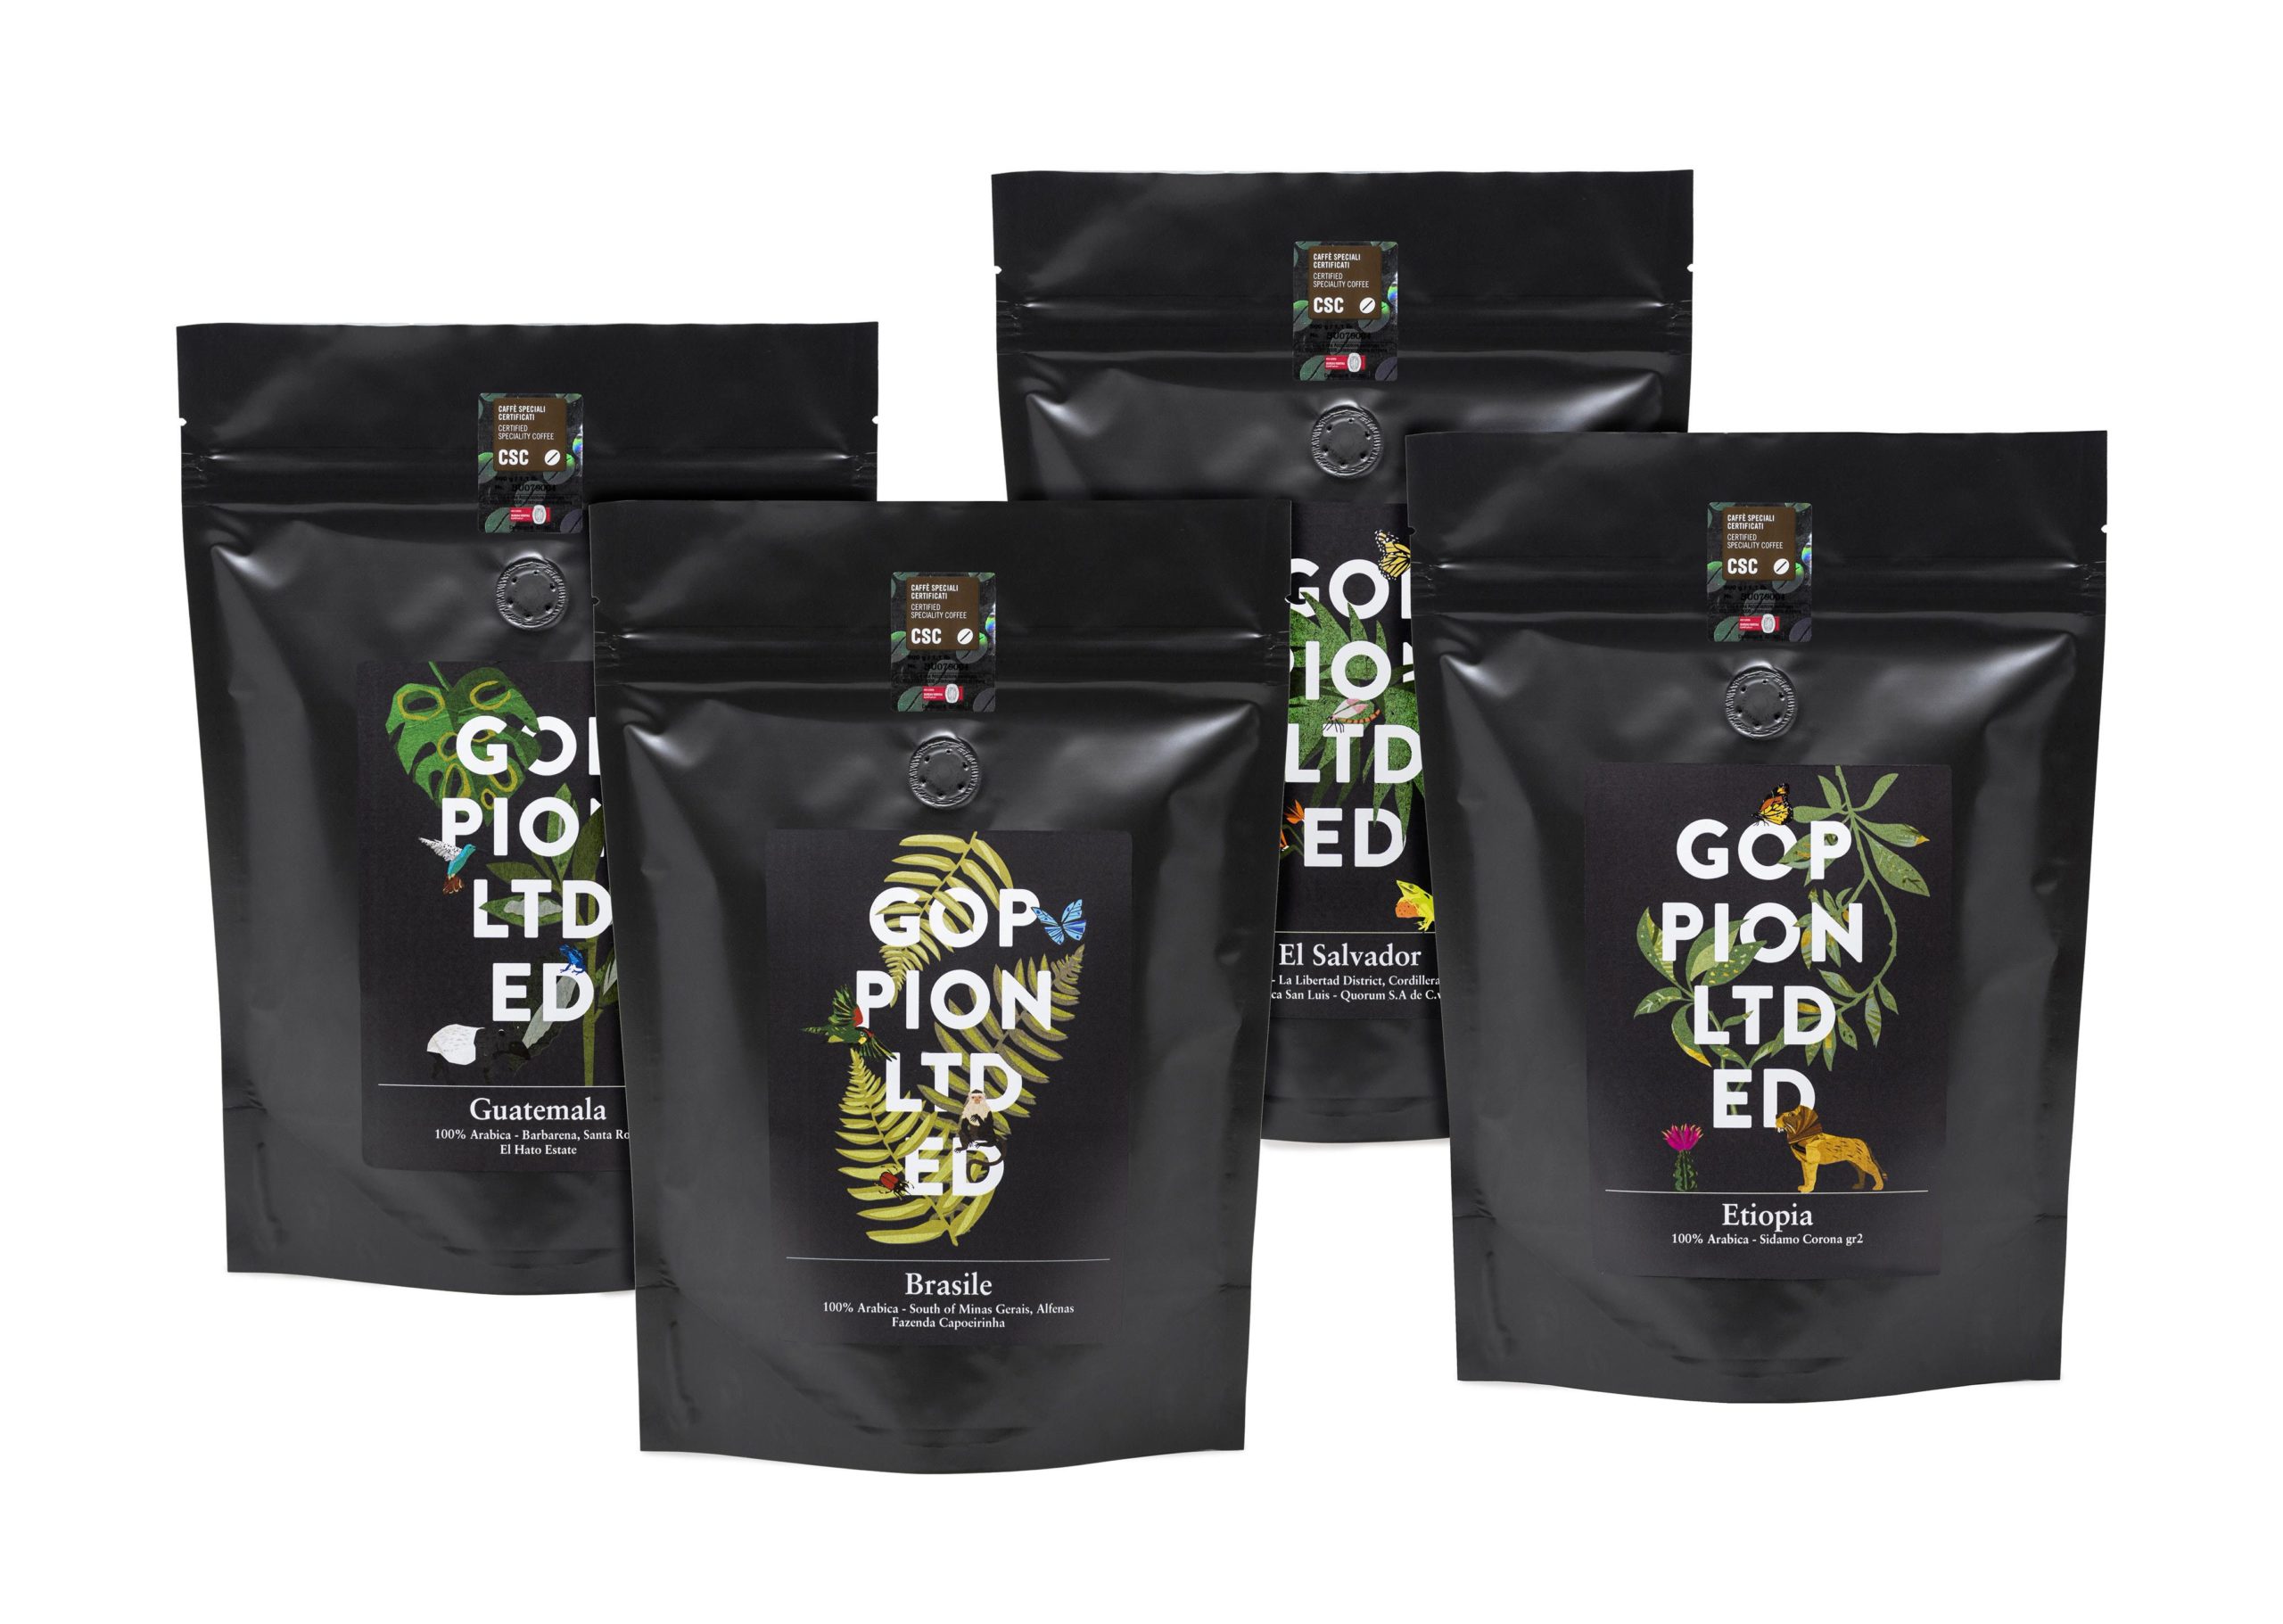 Goppion presenta la nuova linea di caffè monorigine caffè monorigine LTD ED